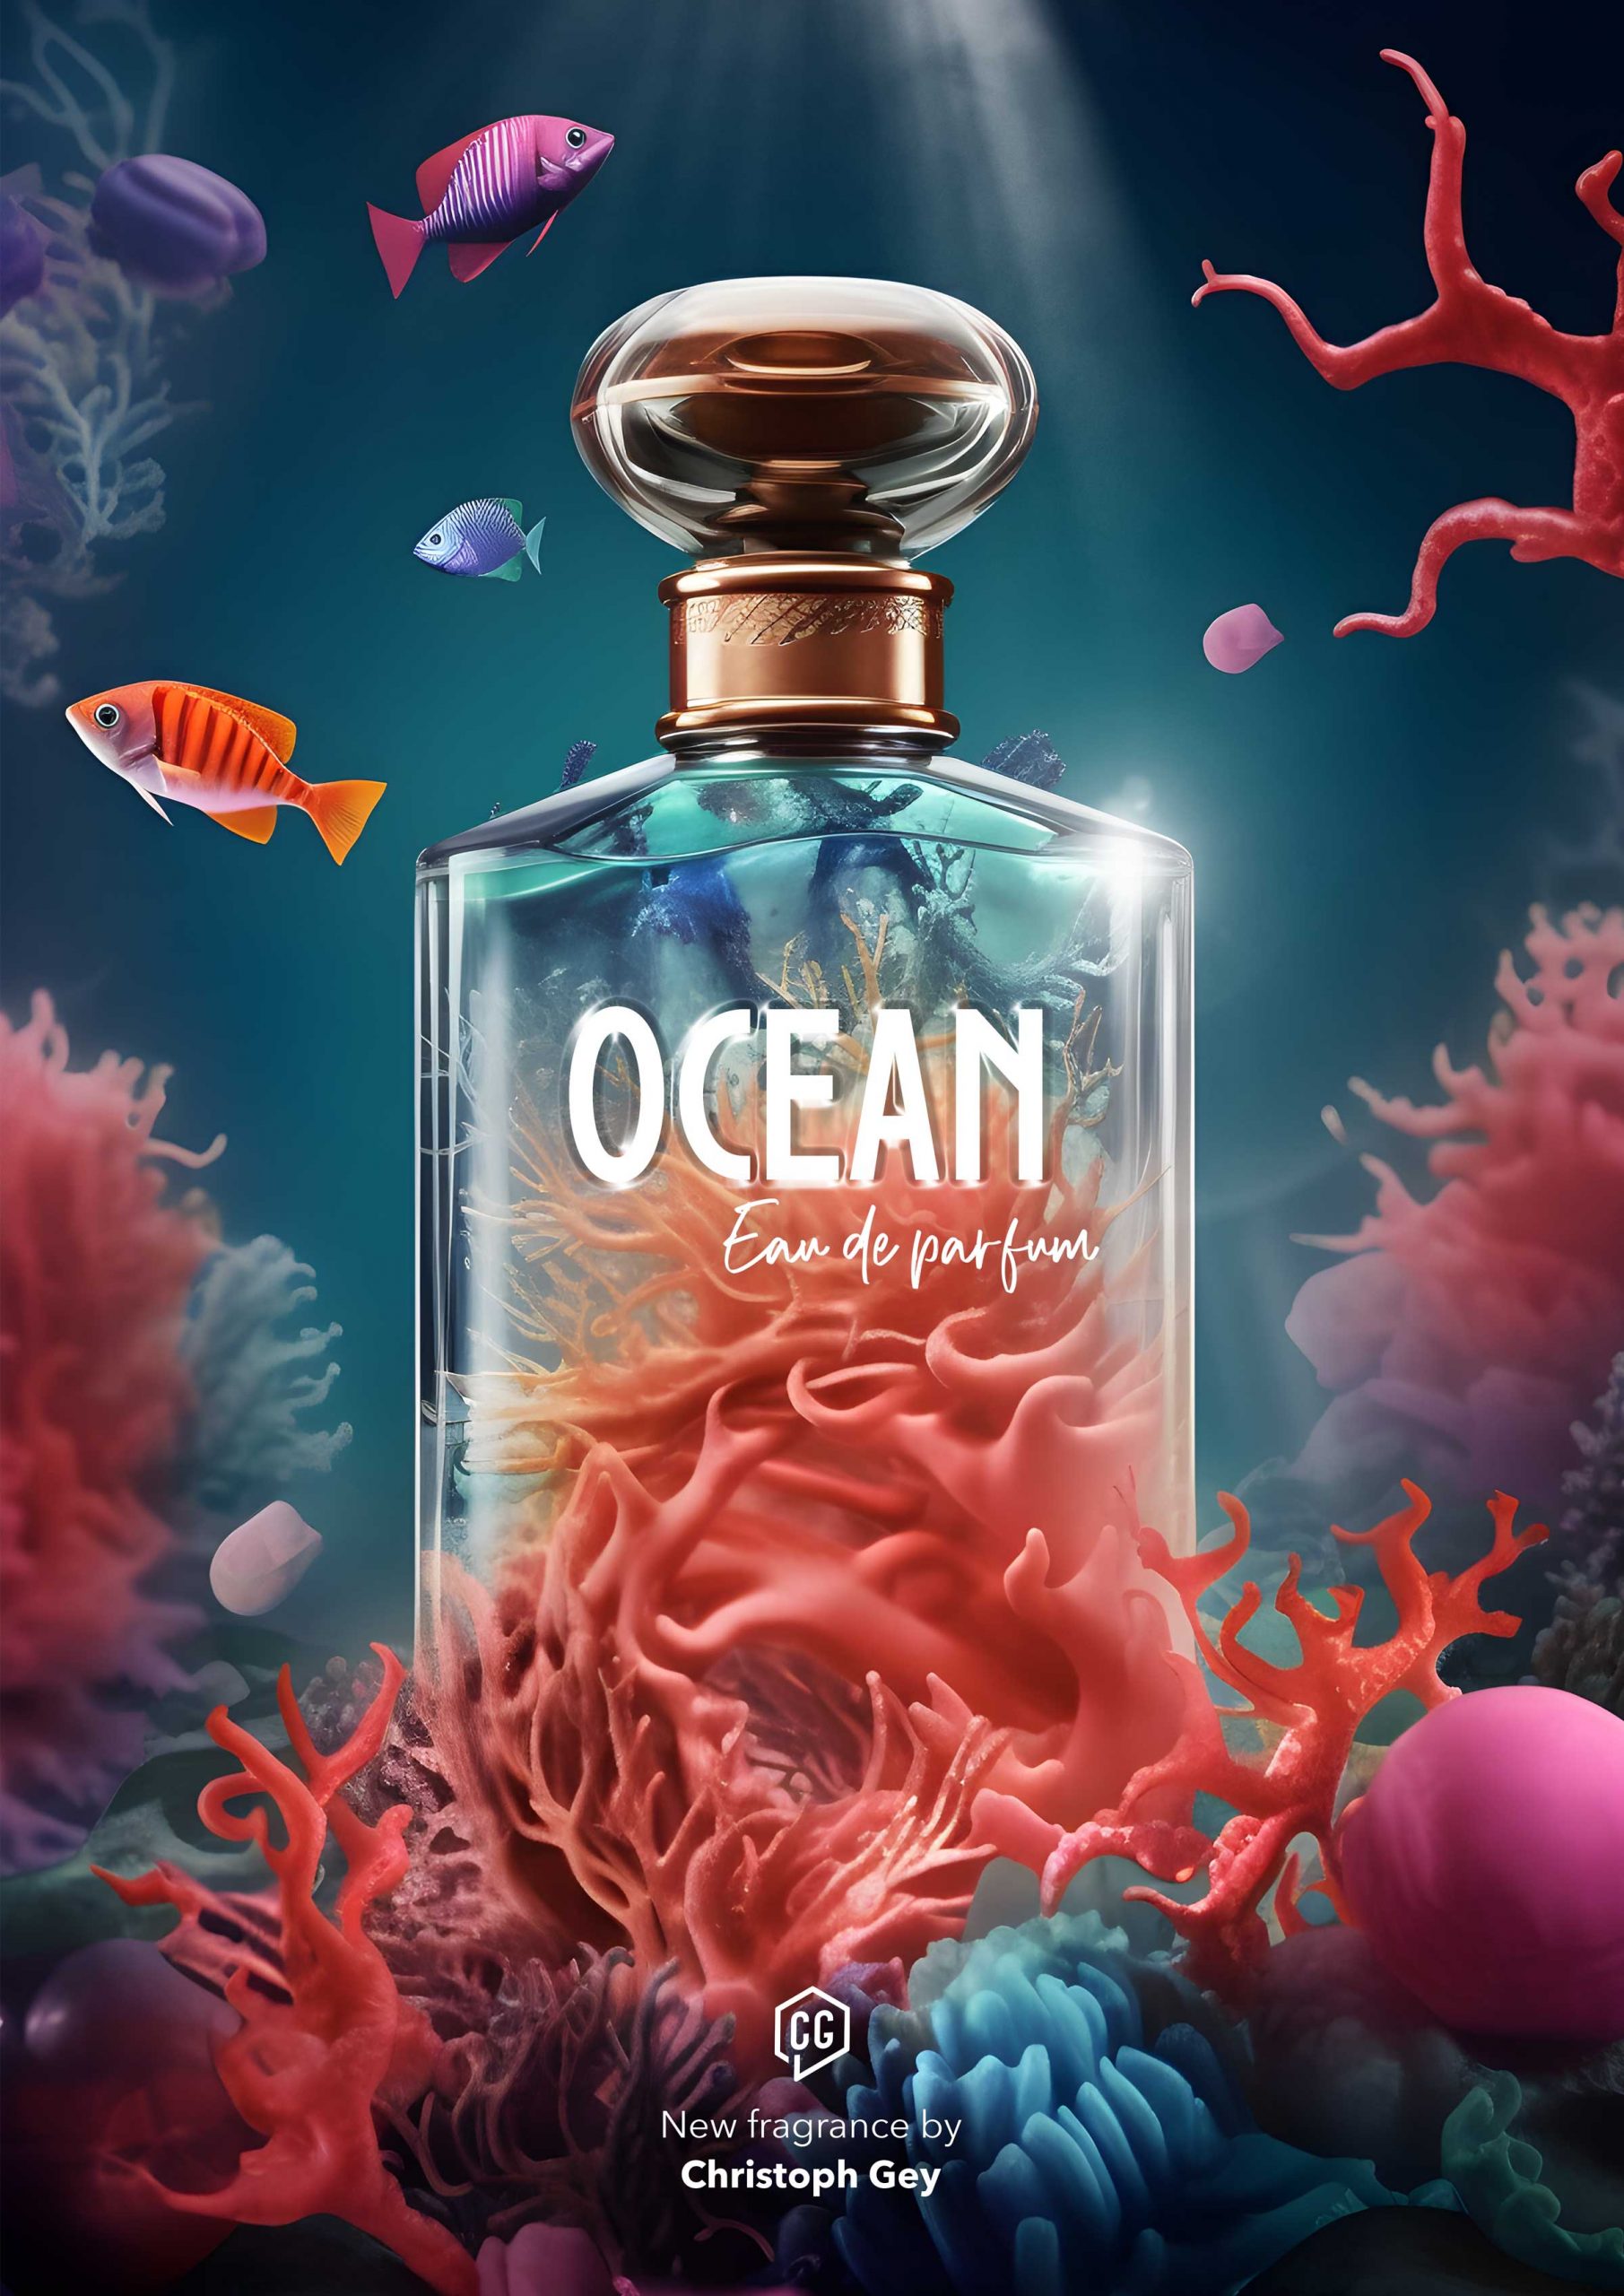 Ocean - Parfum 标签设计和广告由来自德国莱比锡的自由艺术总监 UI/UX 设计师、平面设计师和插画师 Christoph Gey 设计。